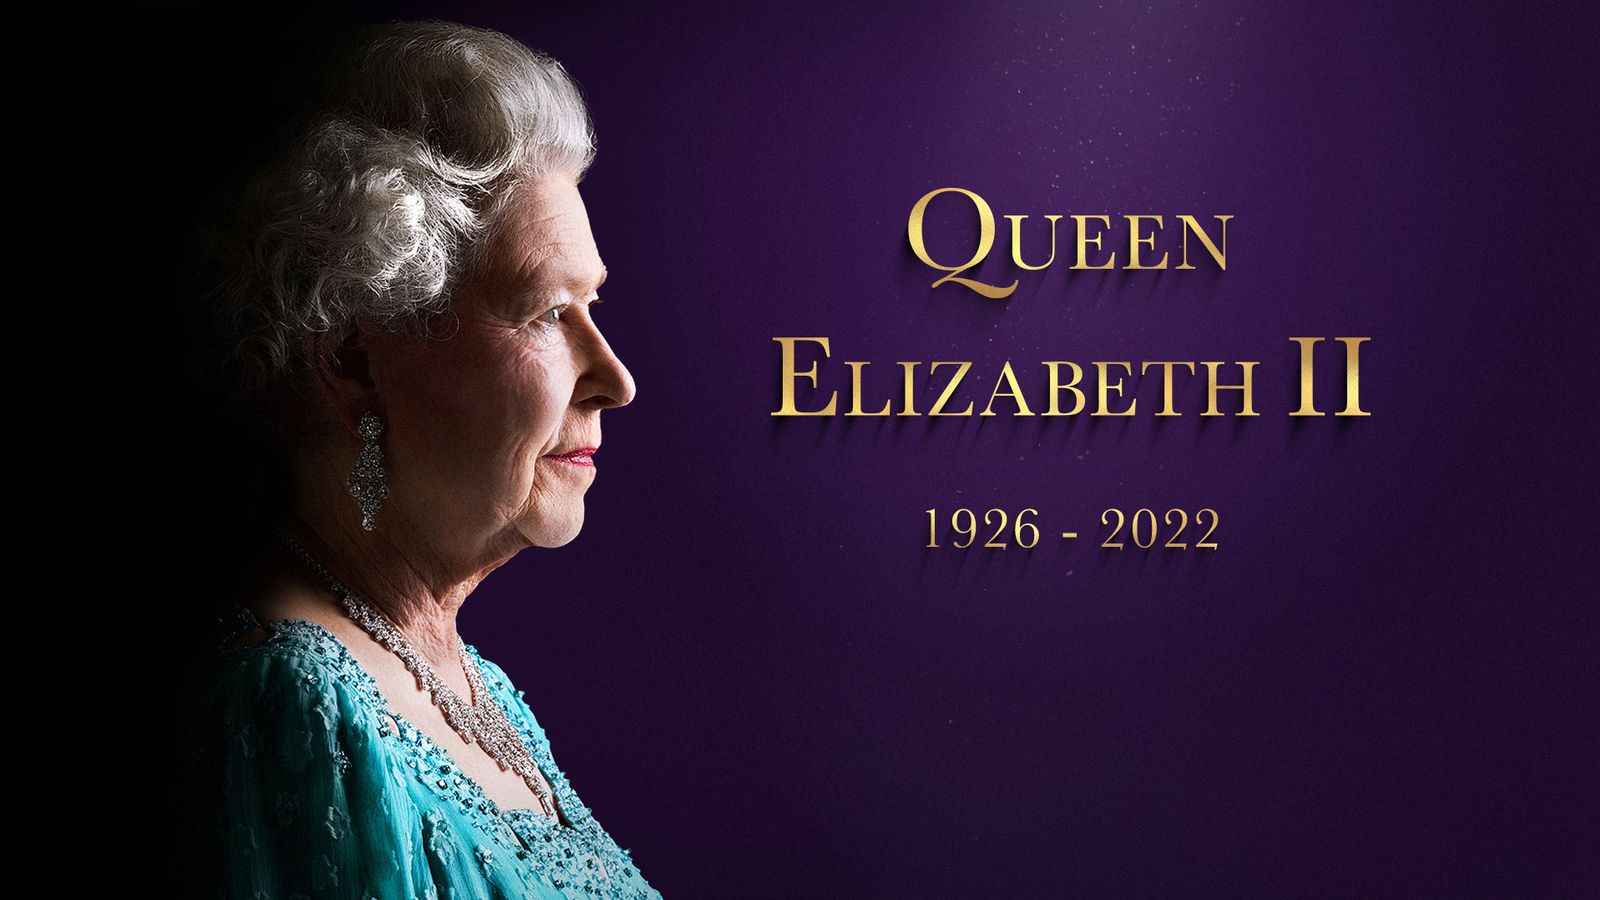 Queen Elizabeth II has died aged 96, Buckingham Palace announces